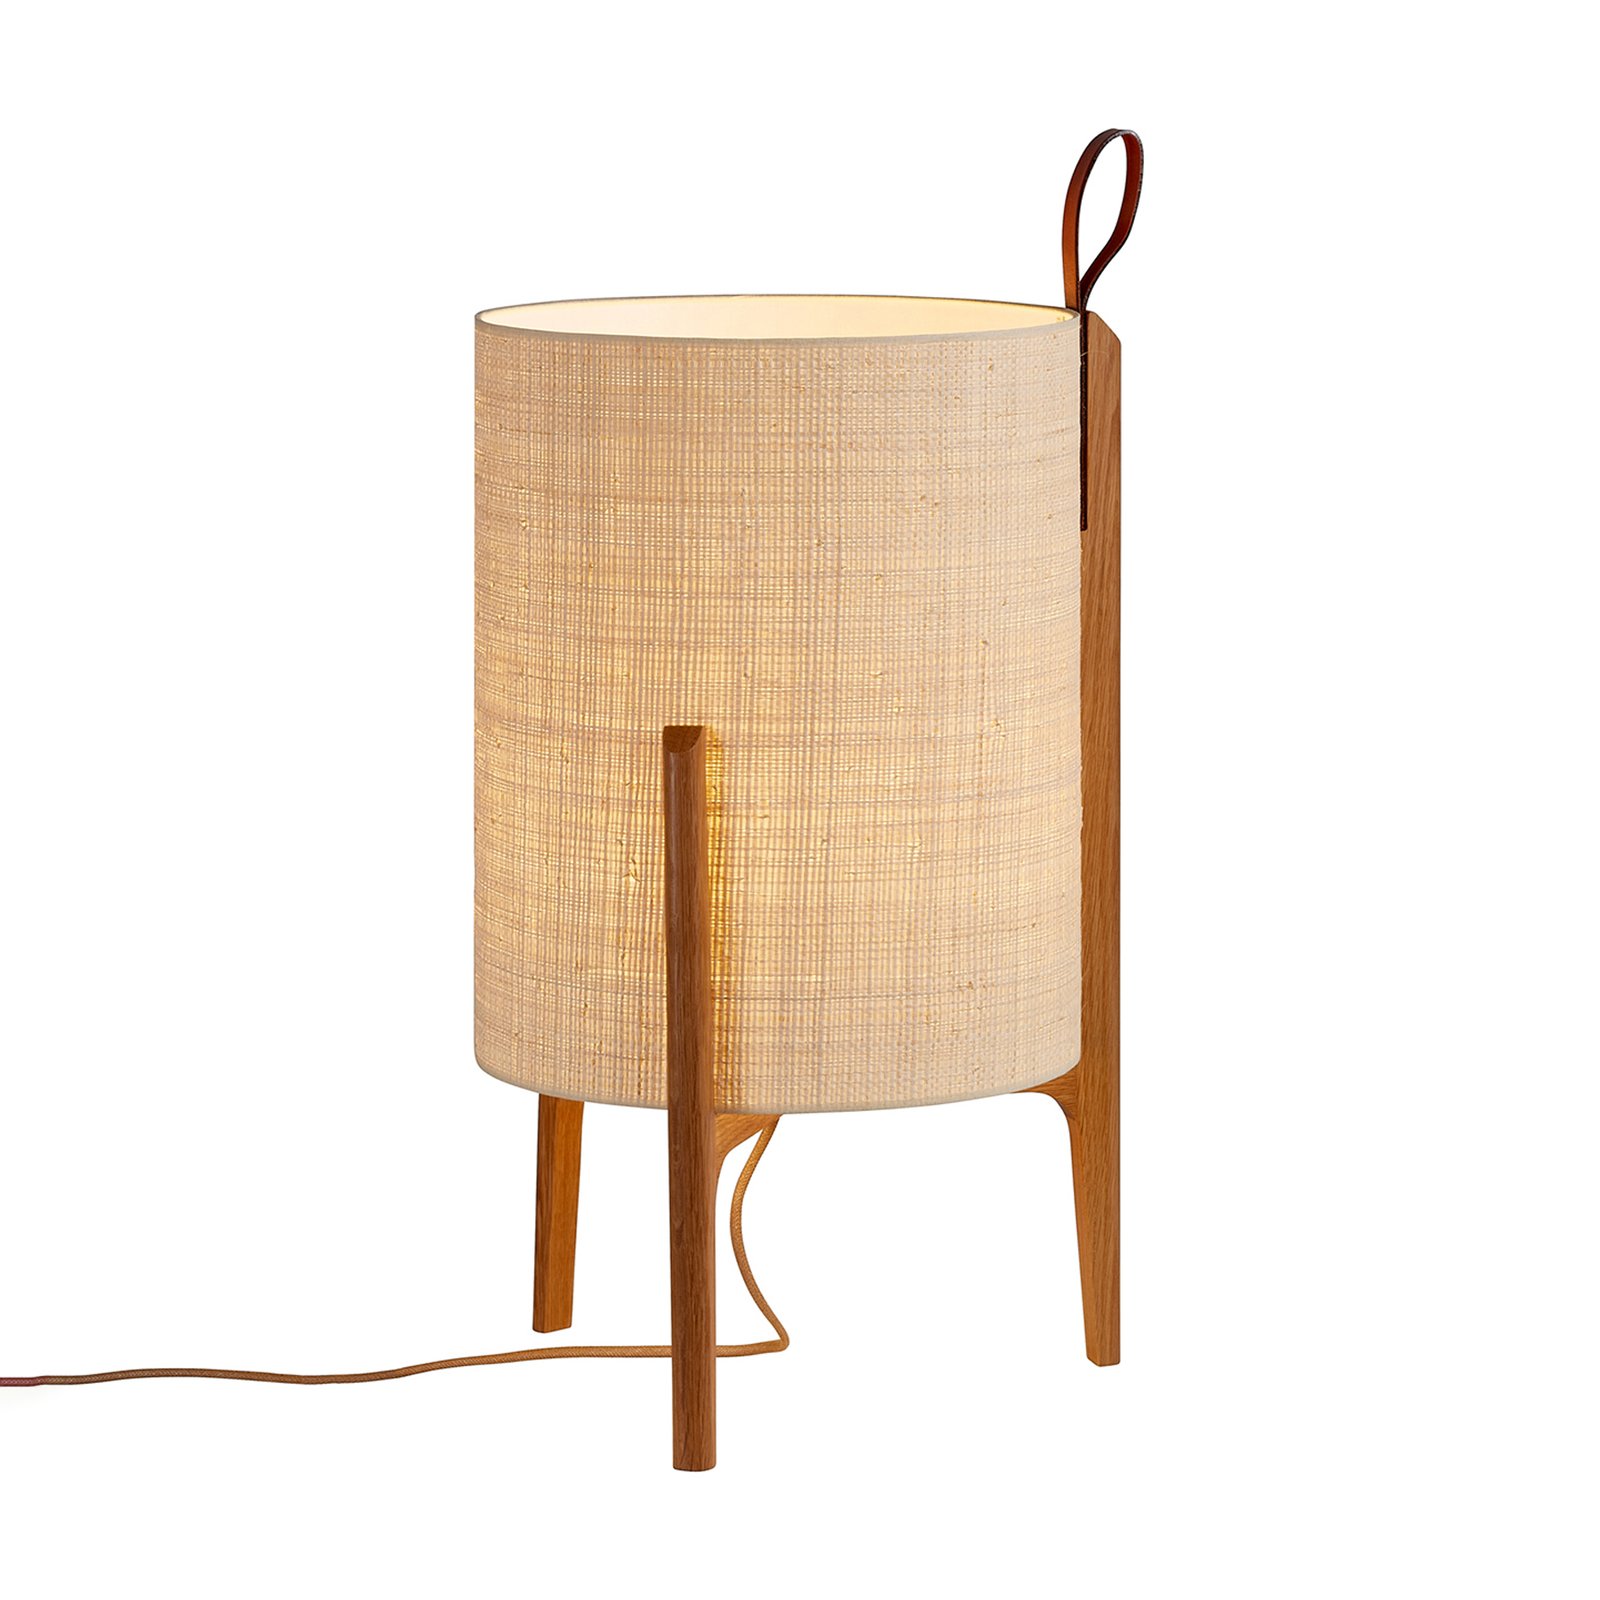 Greta table lamp, natural fibre/oak, 58 cm high